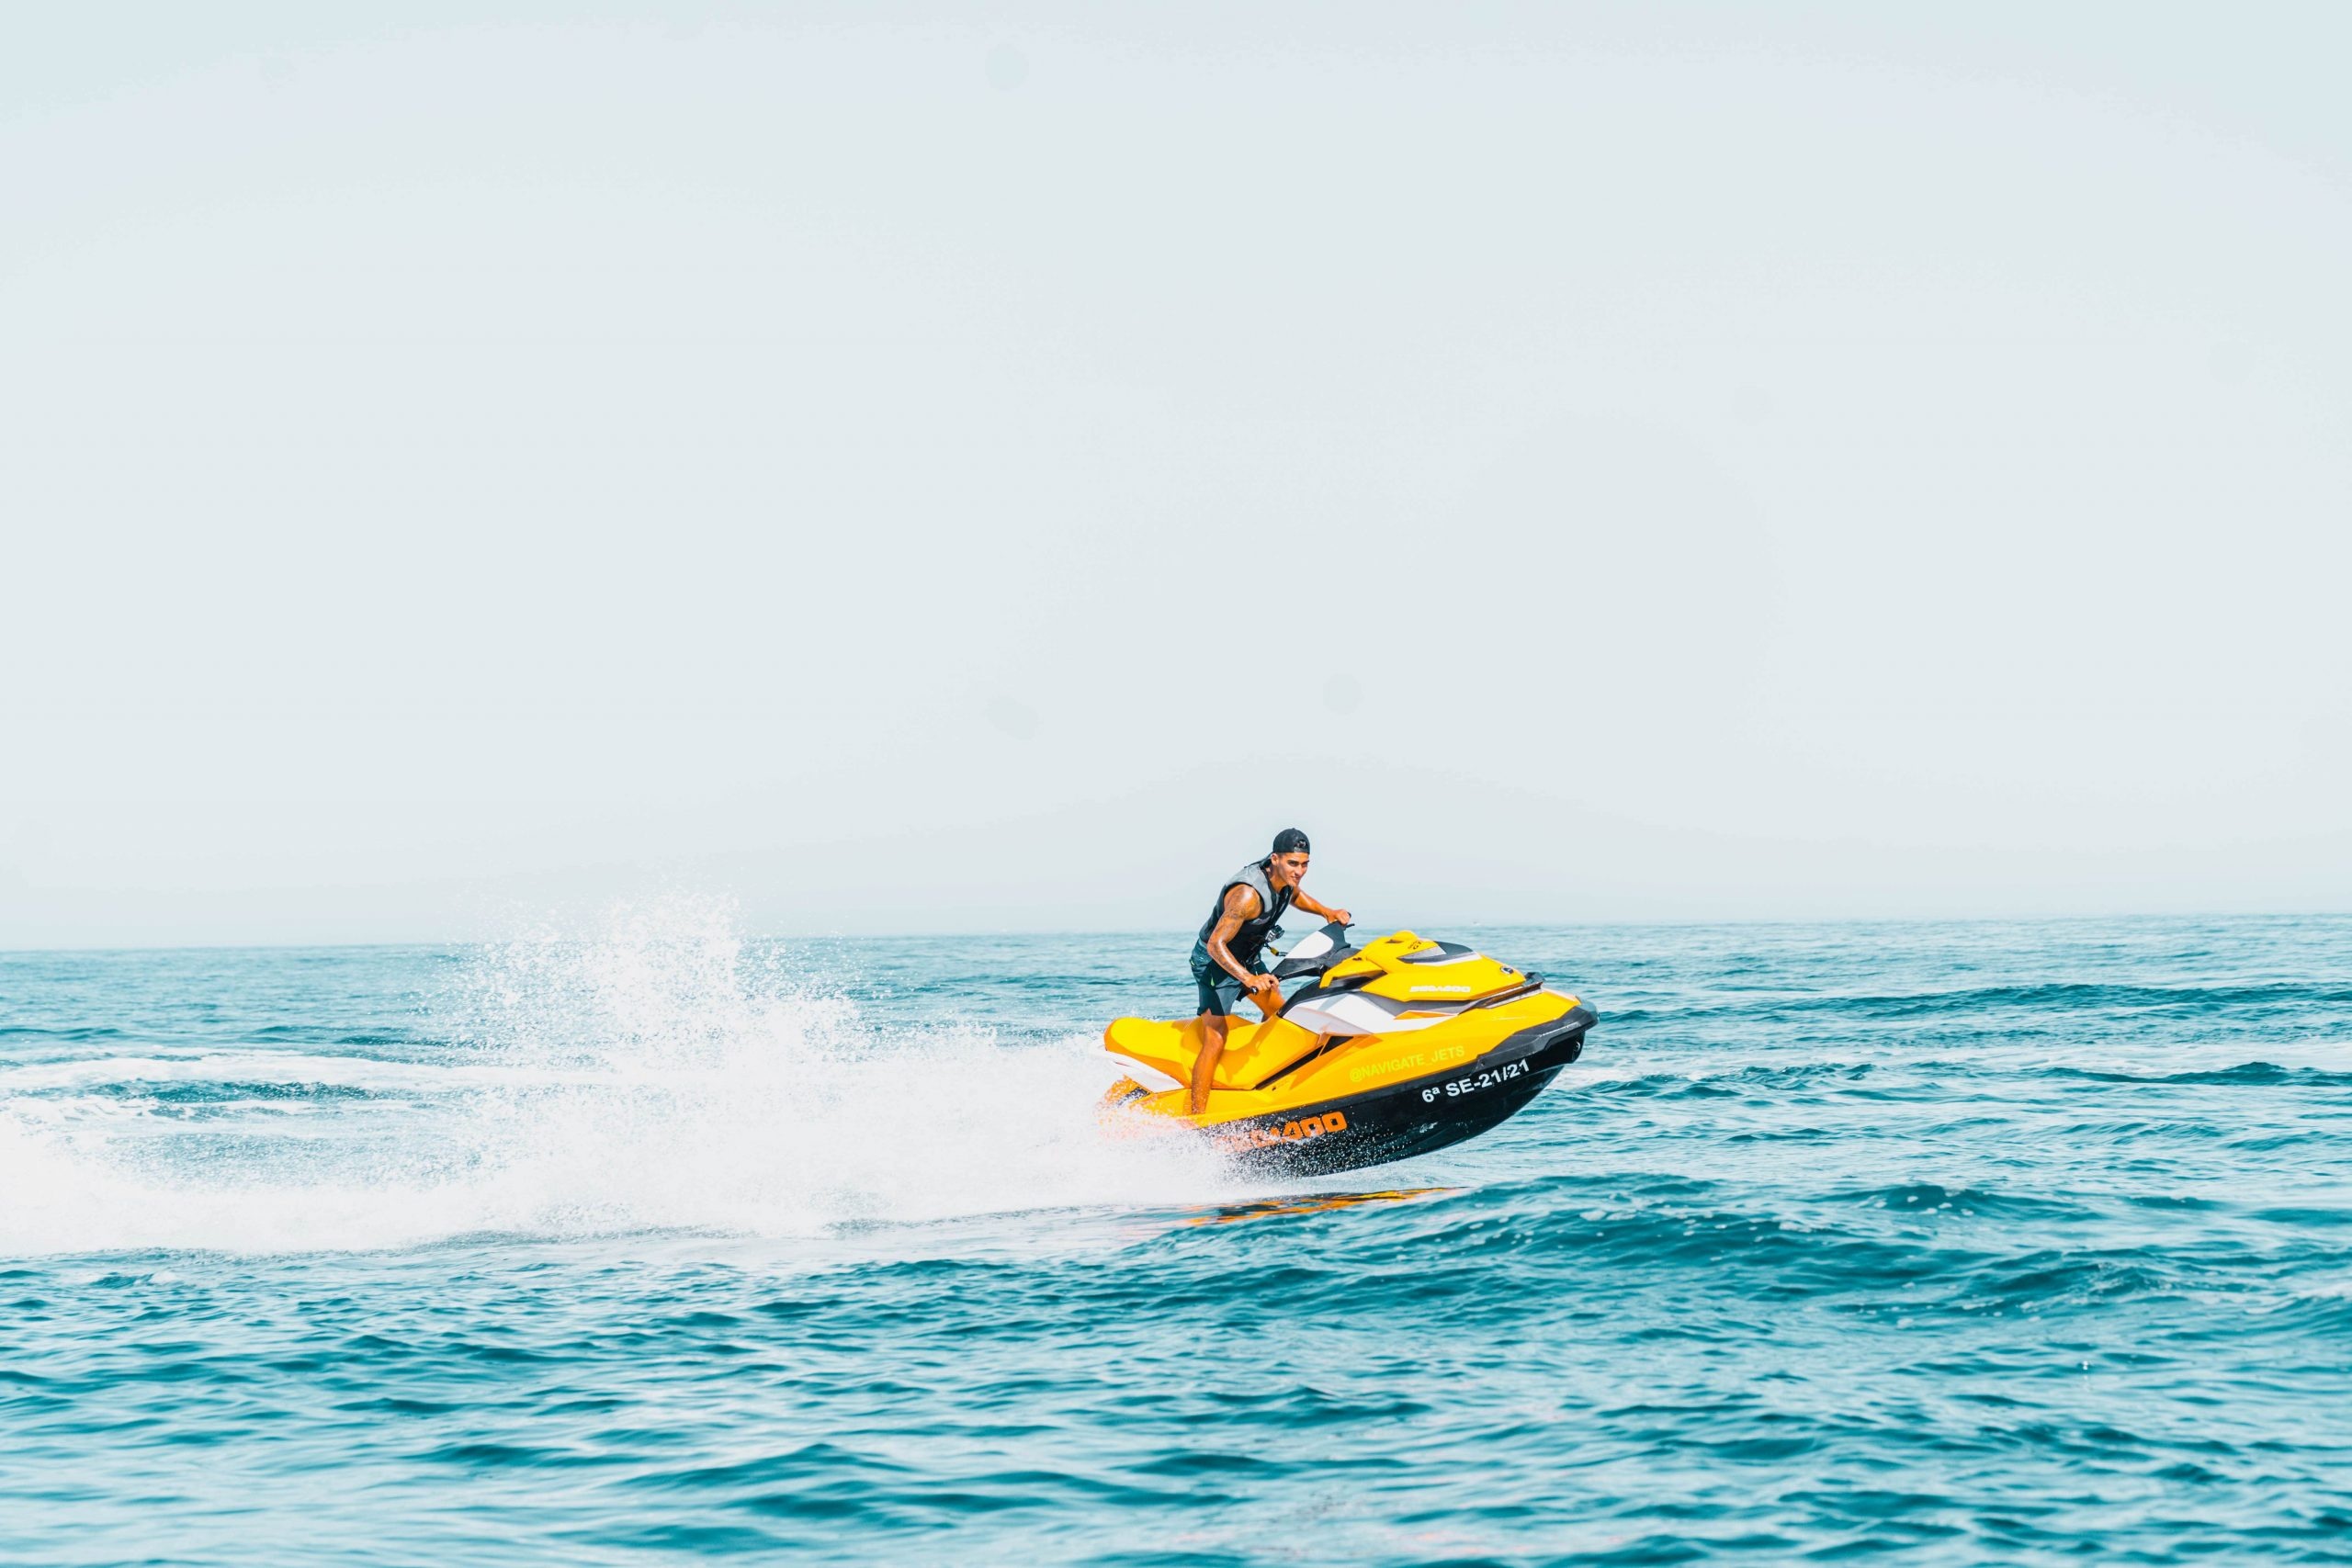 Jet Ski: A recreational watercraft, Marbella, The emerald blue waters. 2560x1710 HD Wallpaper.